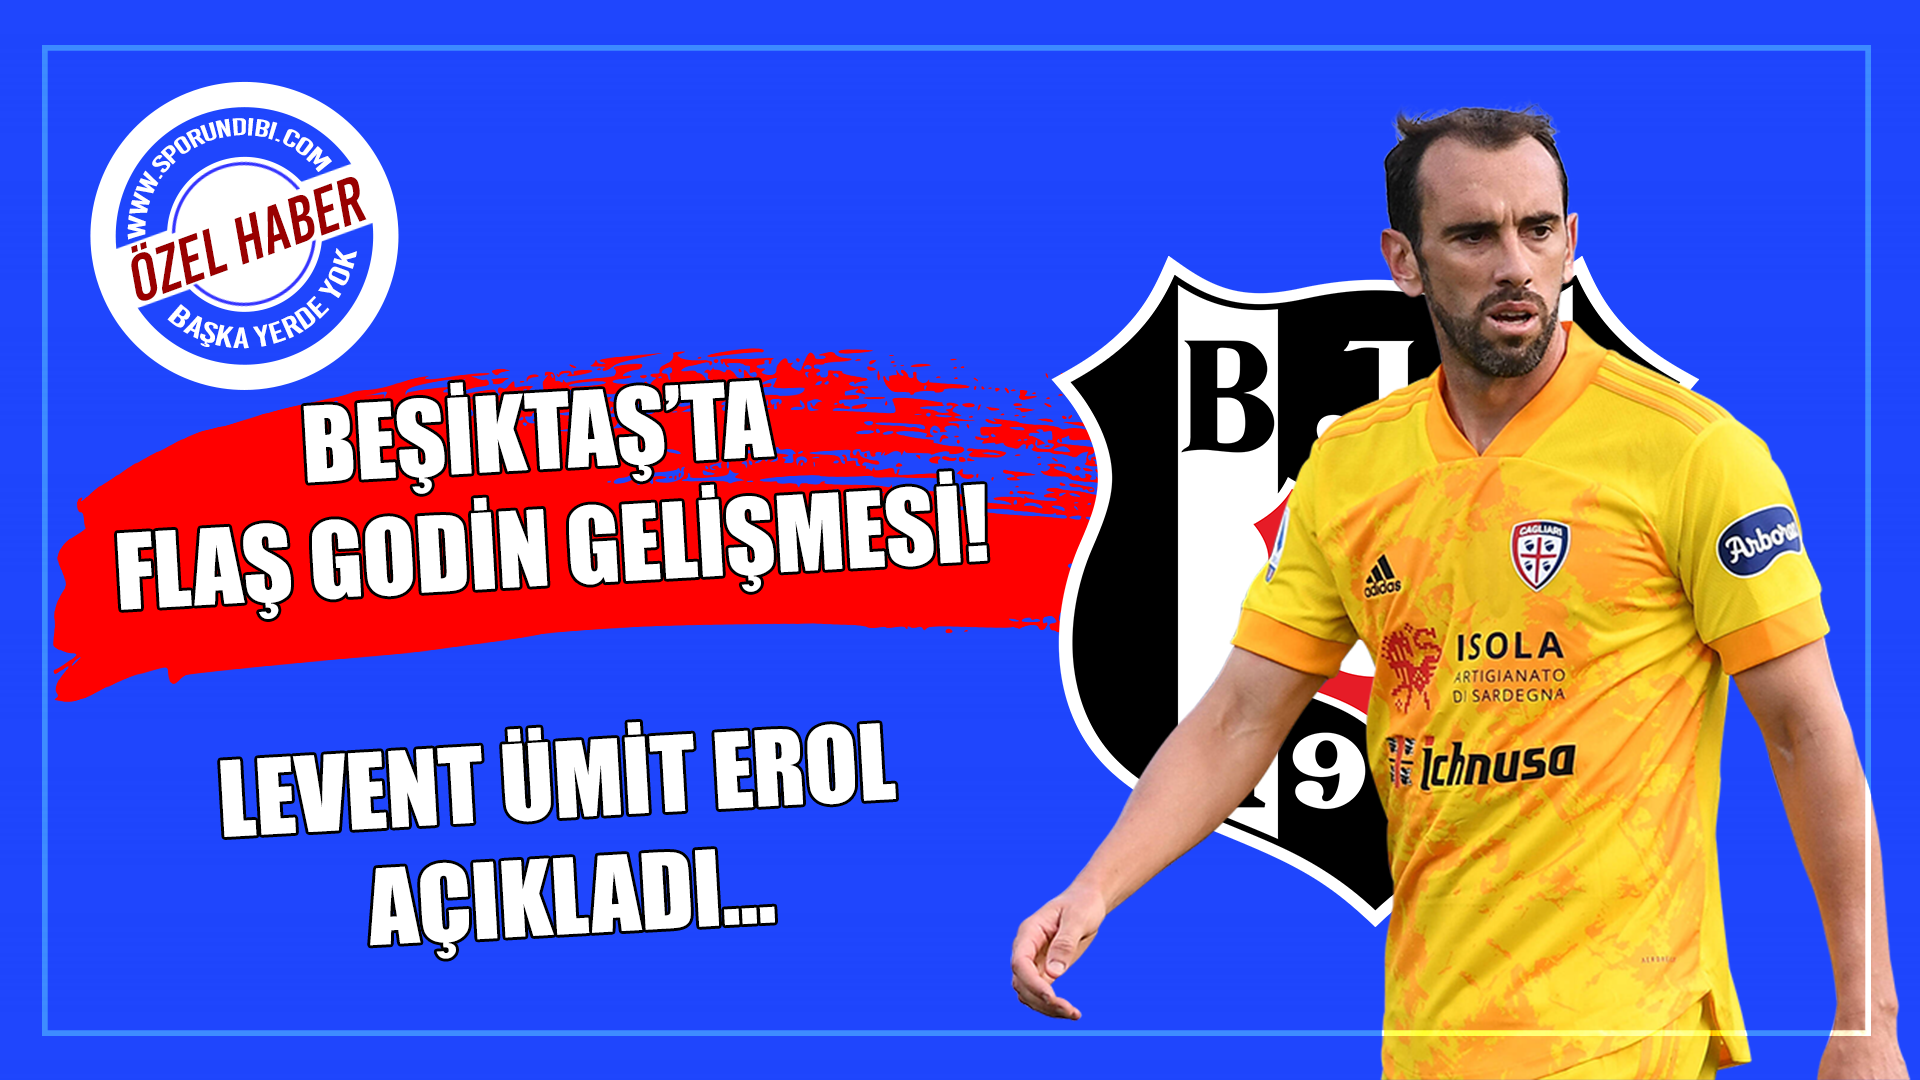 Beşiktaş'ta flaş Godin gelişmesi!